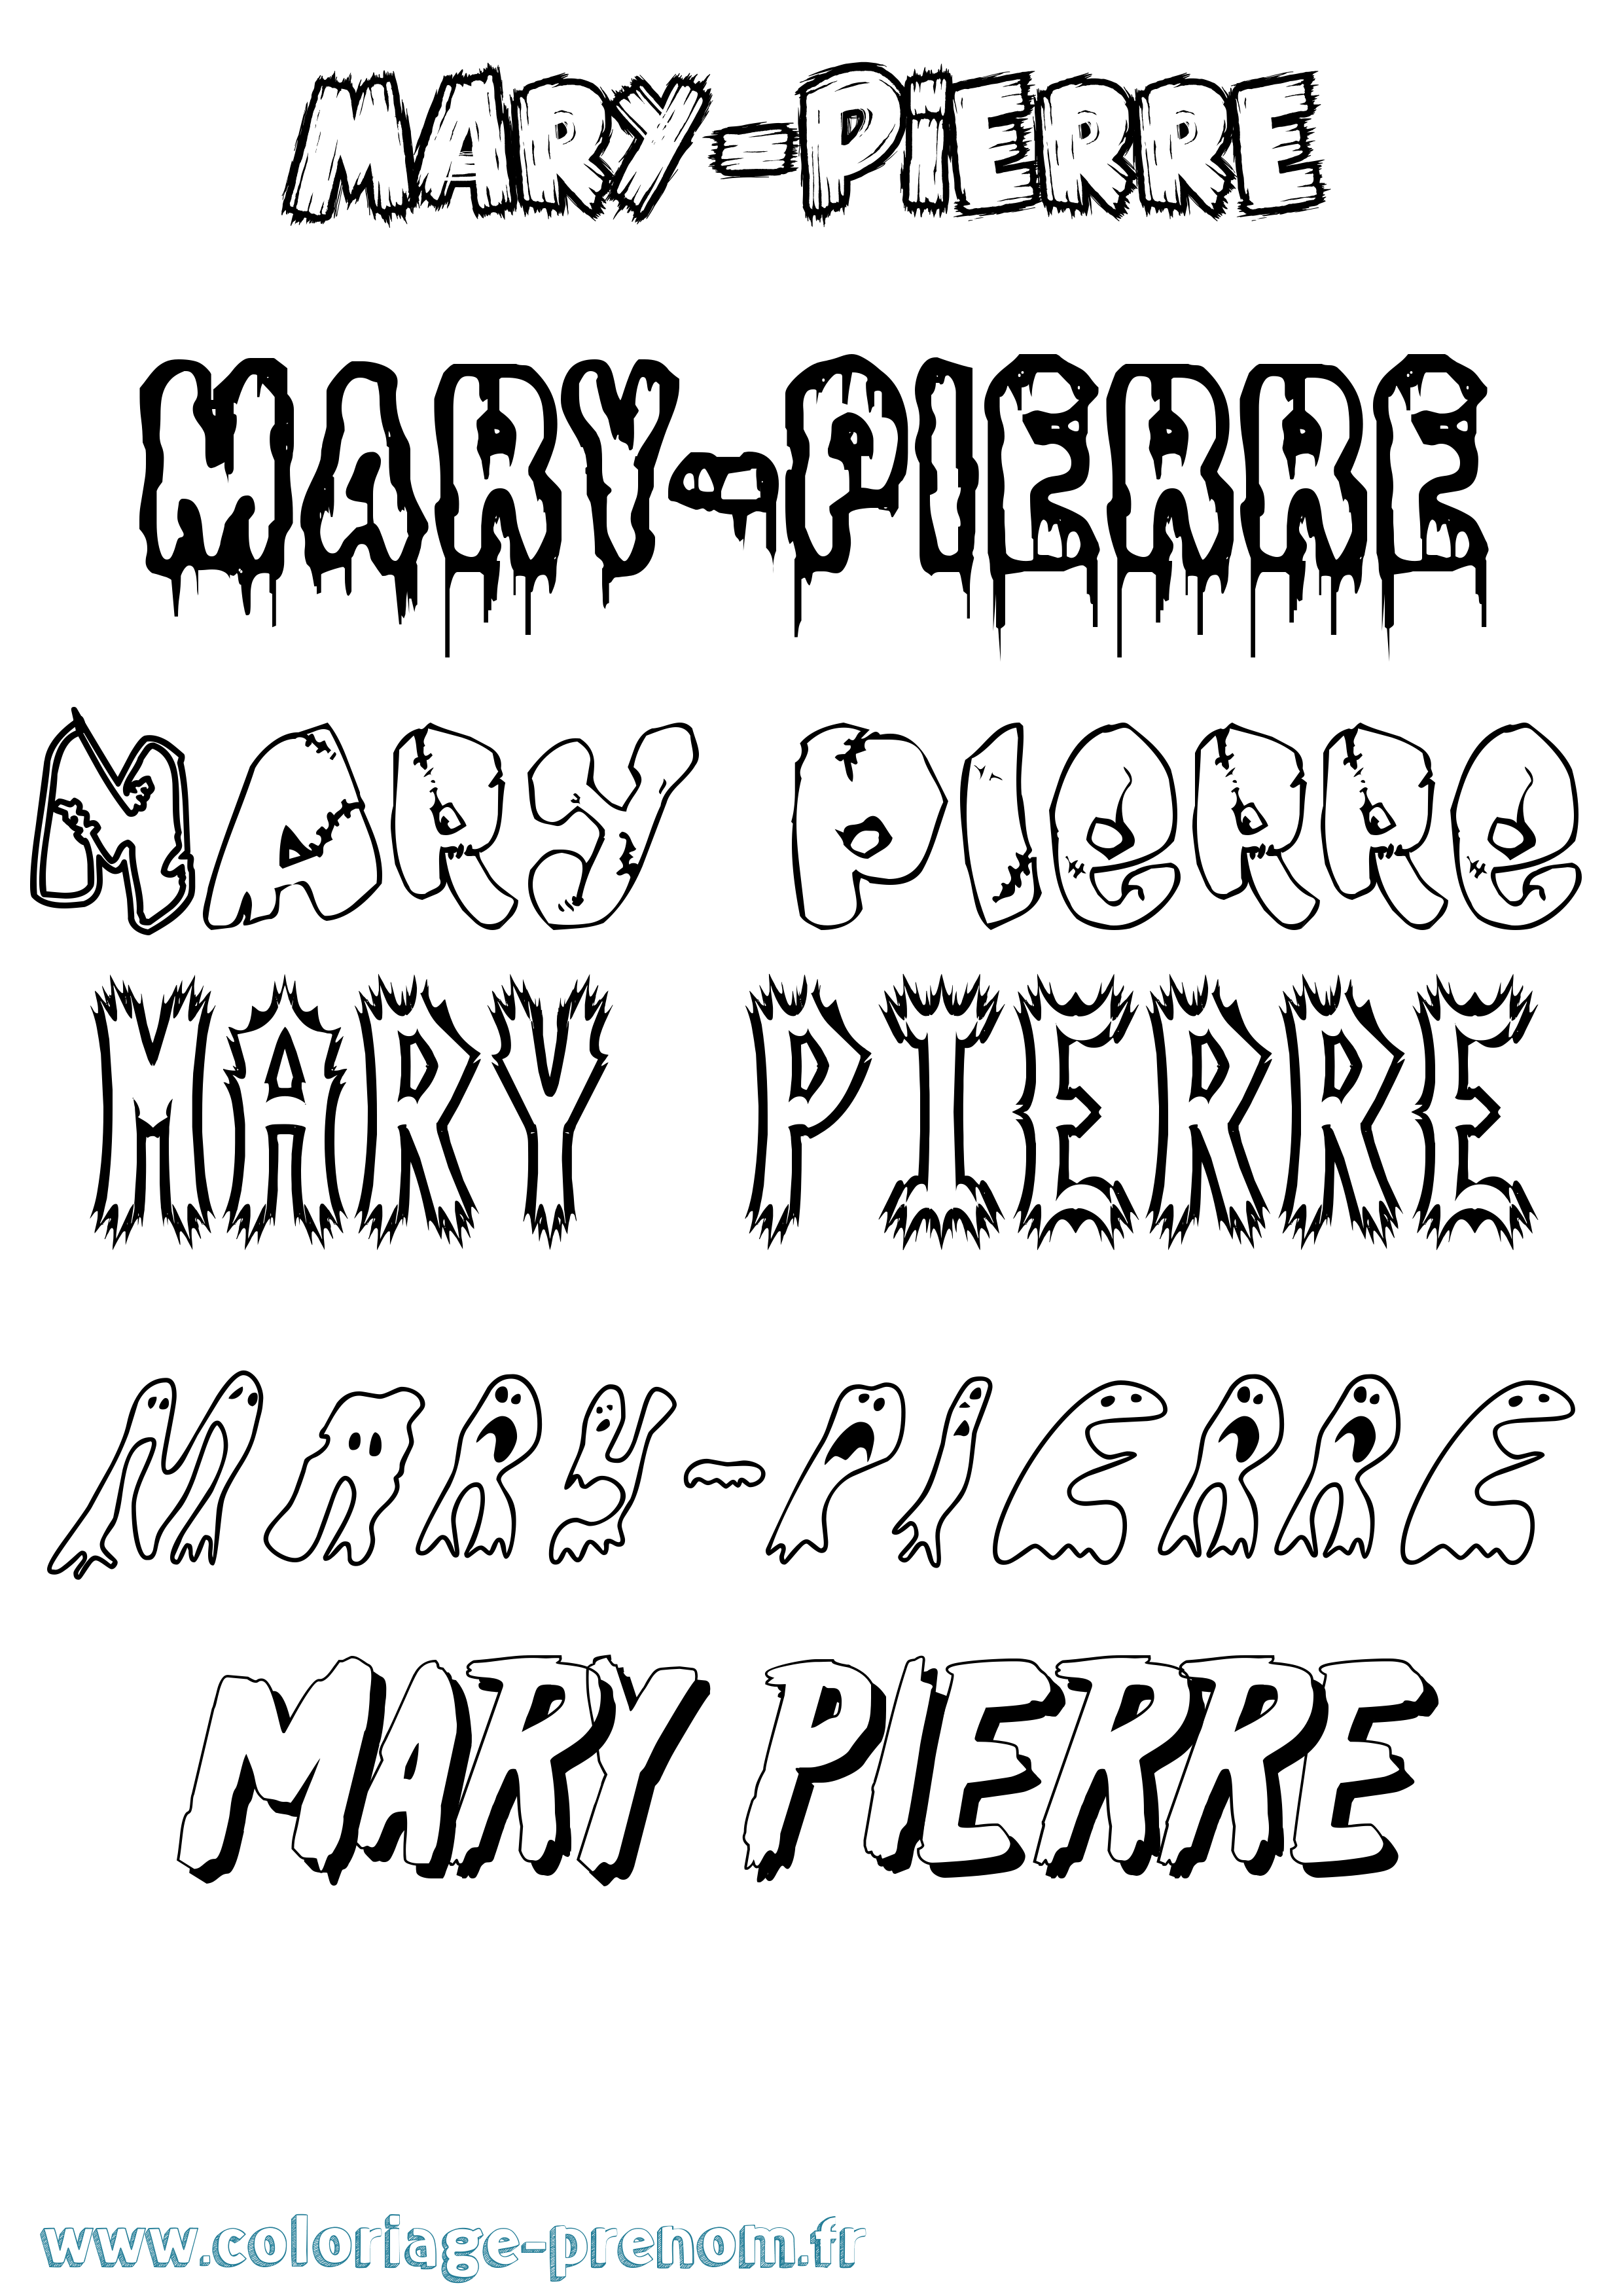 Coloriage prénom Mary-Pierre Frisson